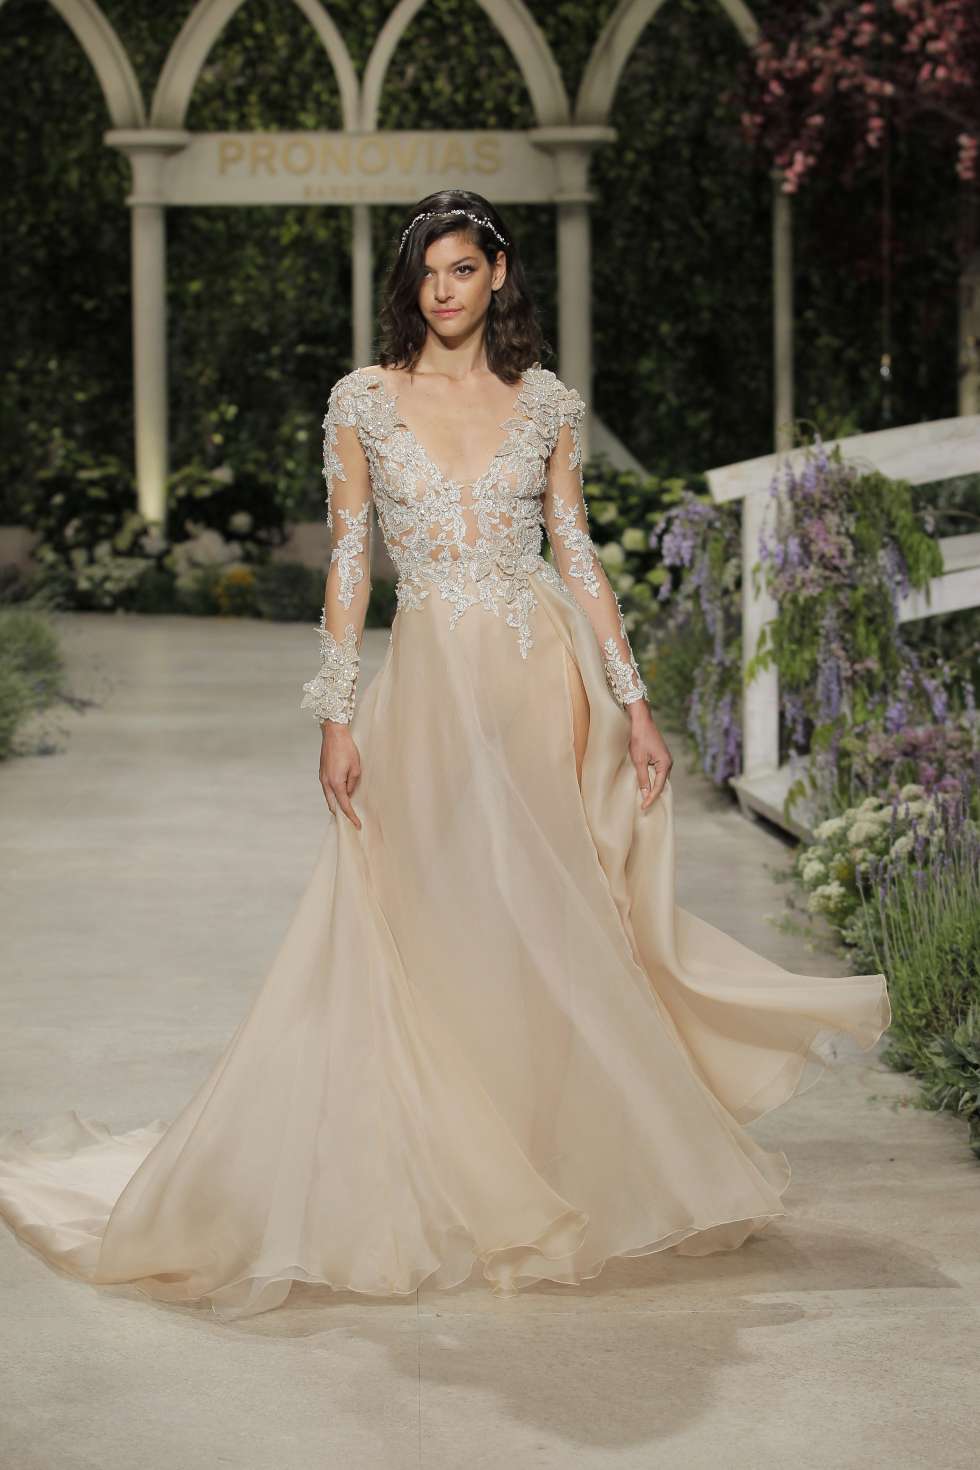 The 2019 Atelier Pronovias Wedding Dress Collection